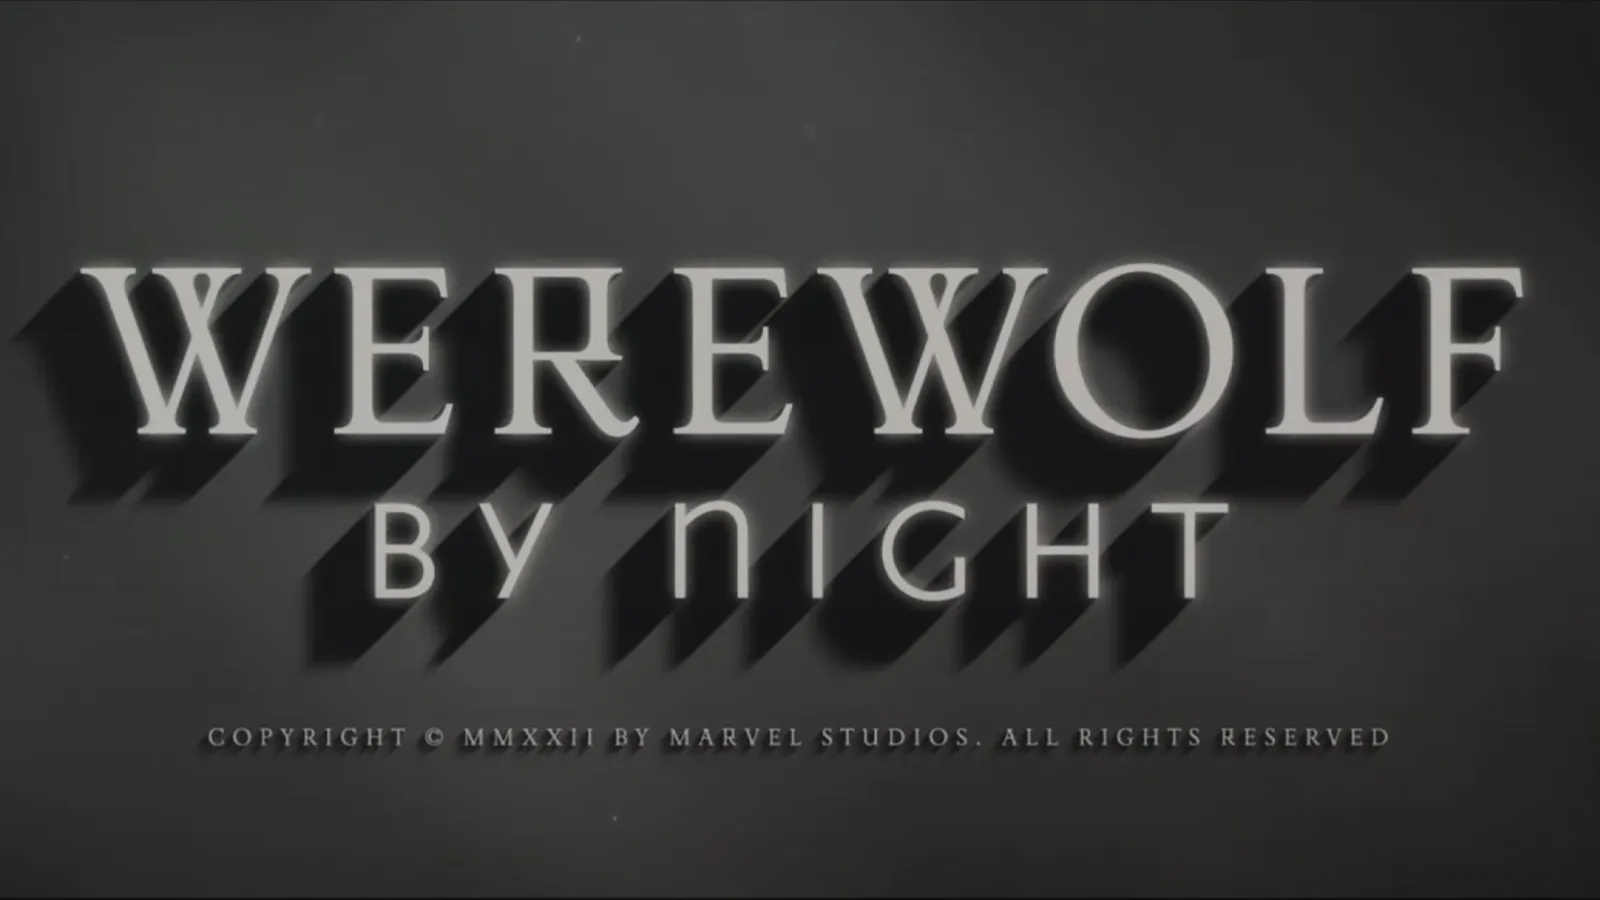 'Werewolf by Night' is good, pulpy fun